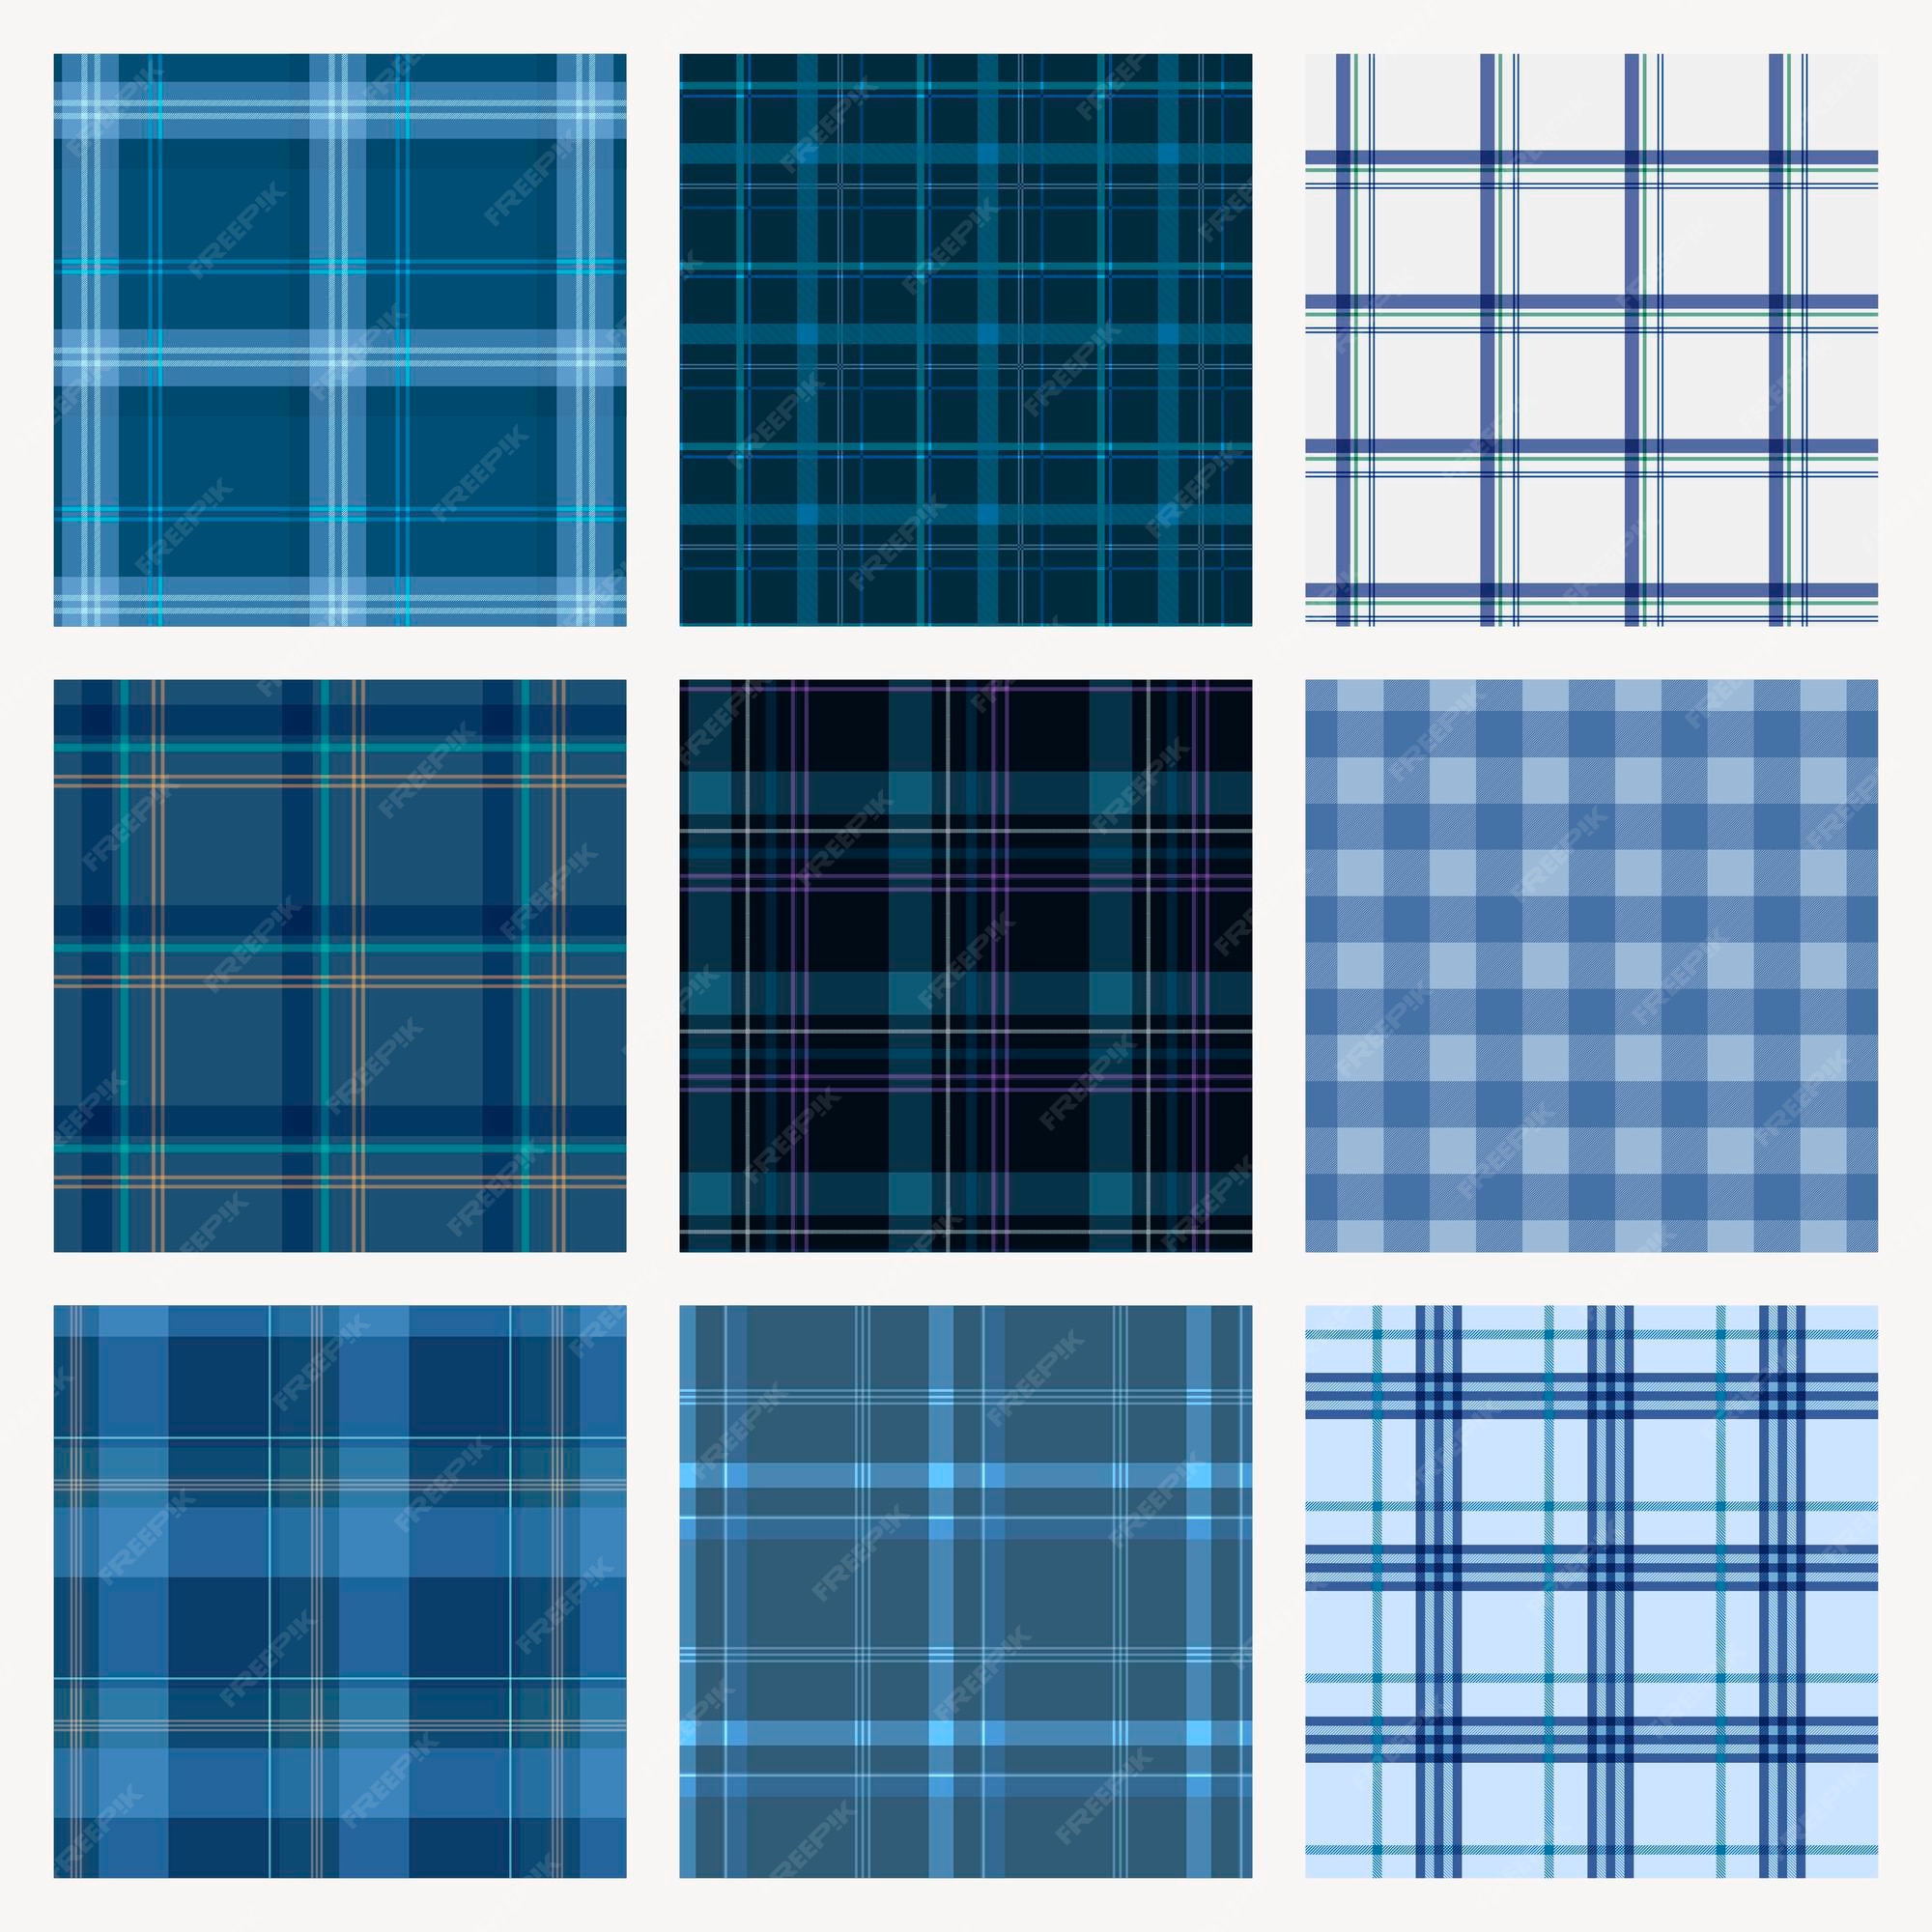 blue-tartan-background-traditional-scottish-design-vector-collection_53876-156261.jpg